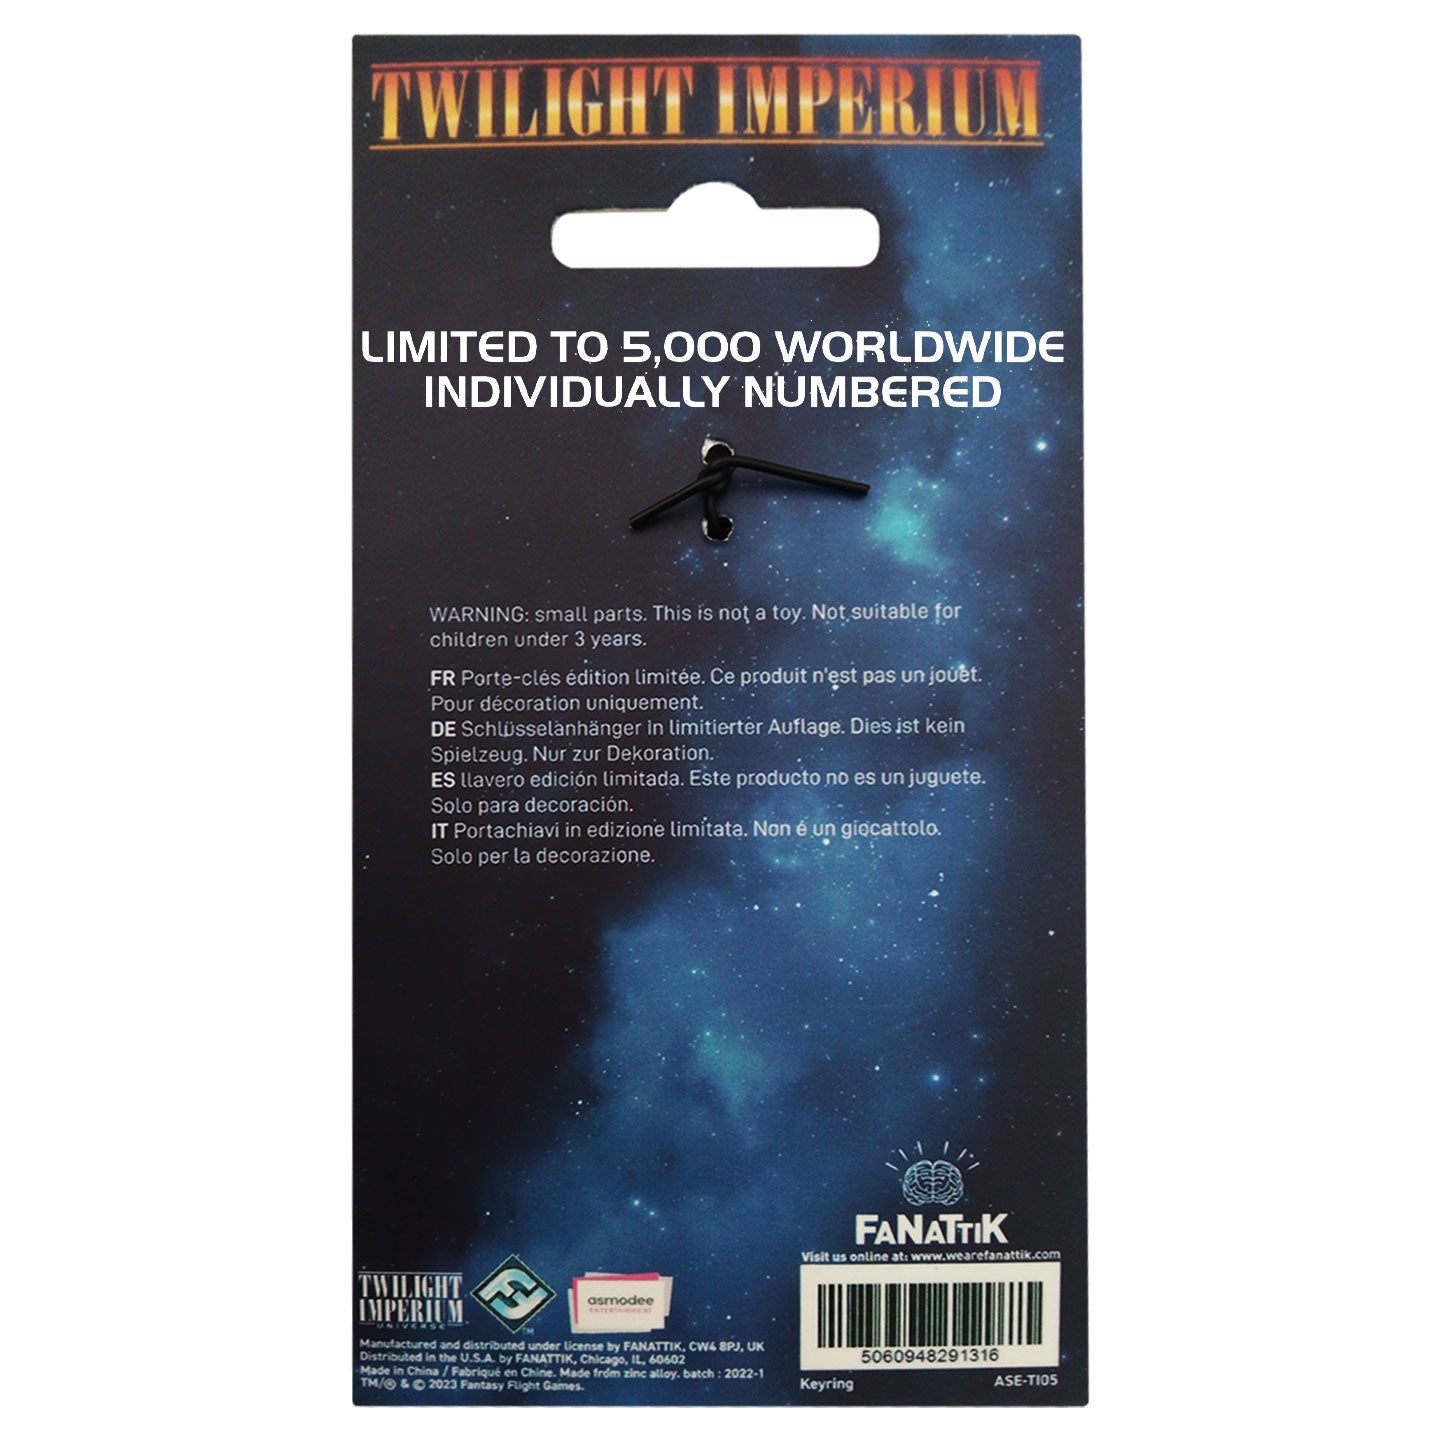 Twilight Imperium Key Ring